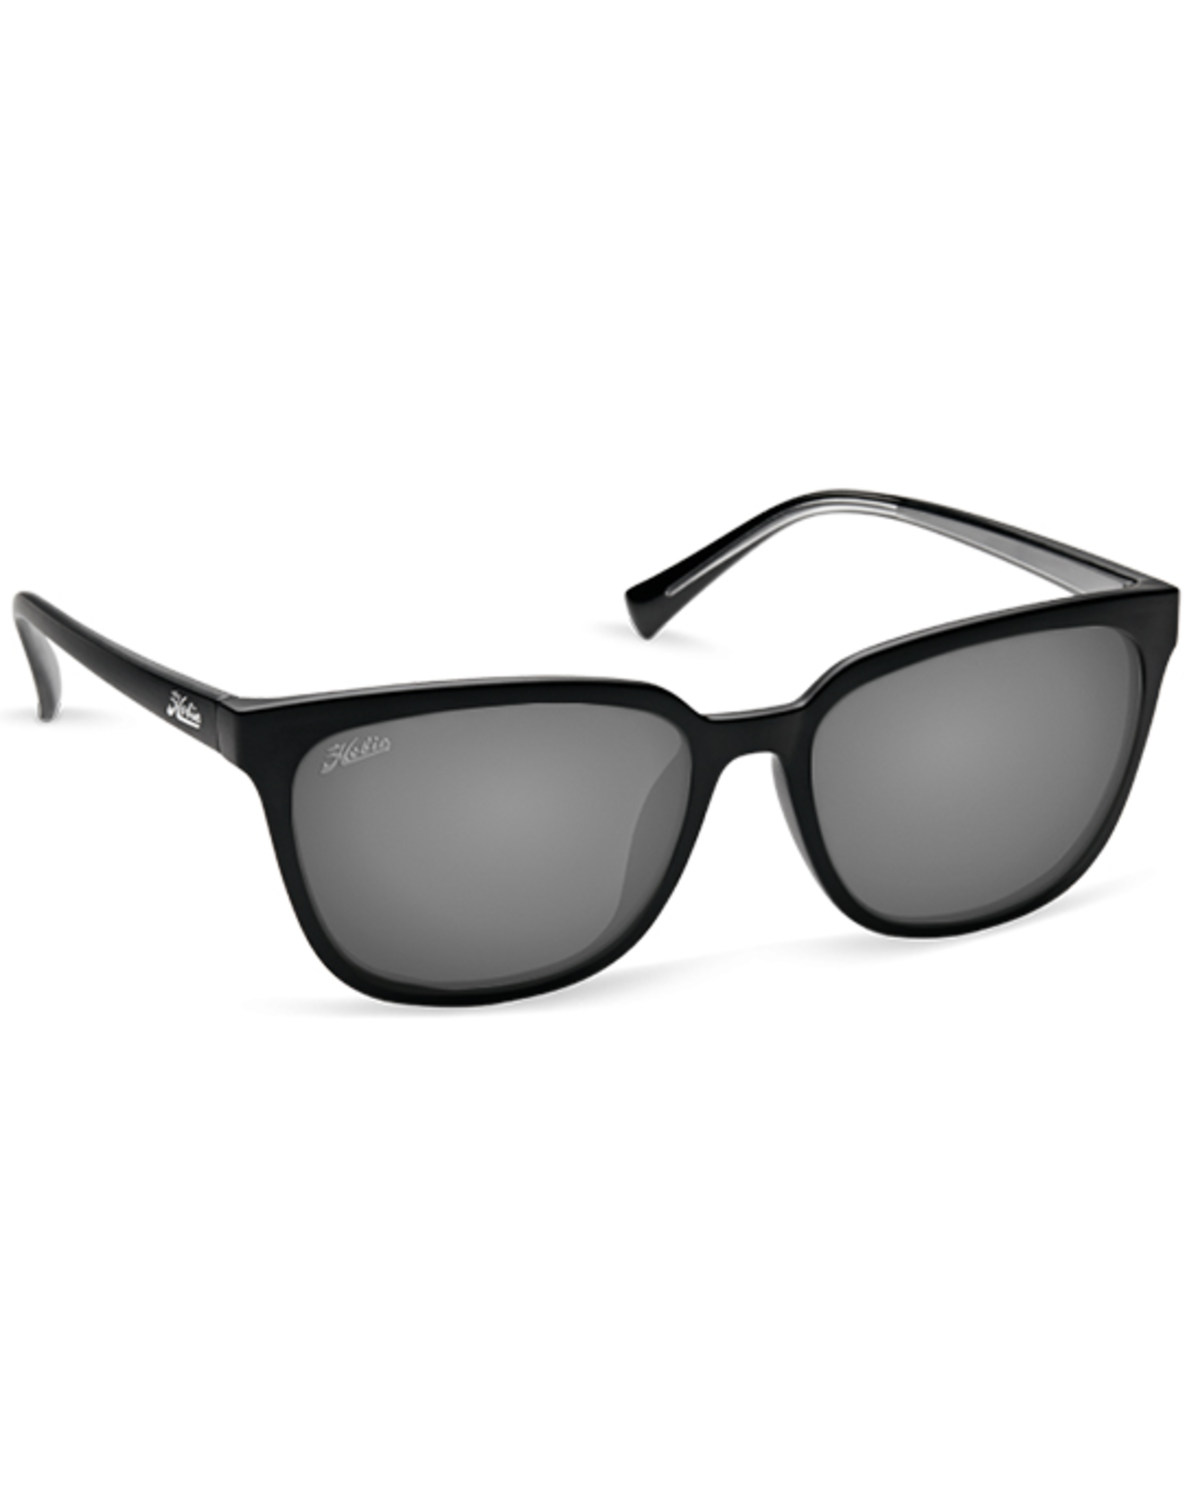 Hobie Women's Monica Black Satin & Gray Polarized Sunglasses